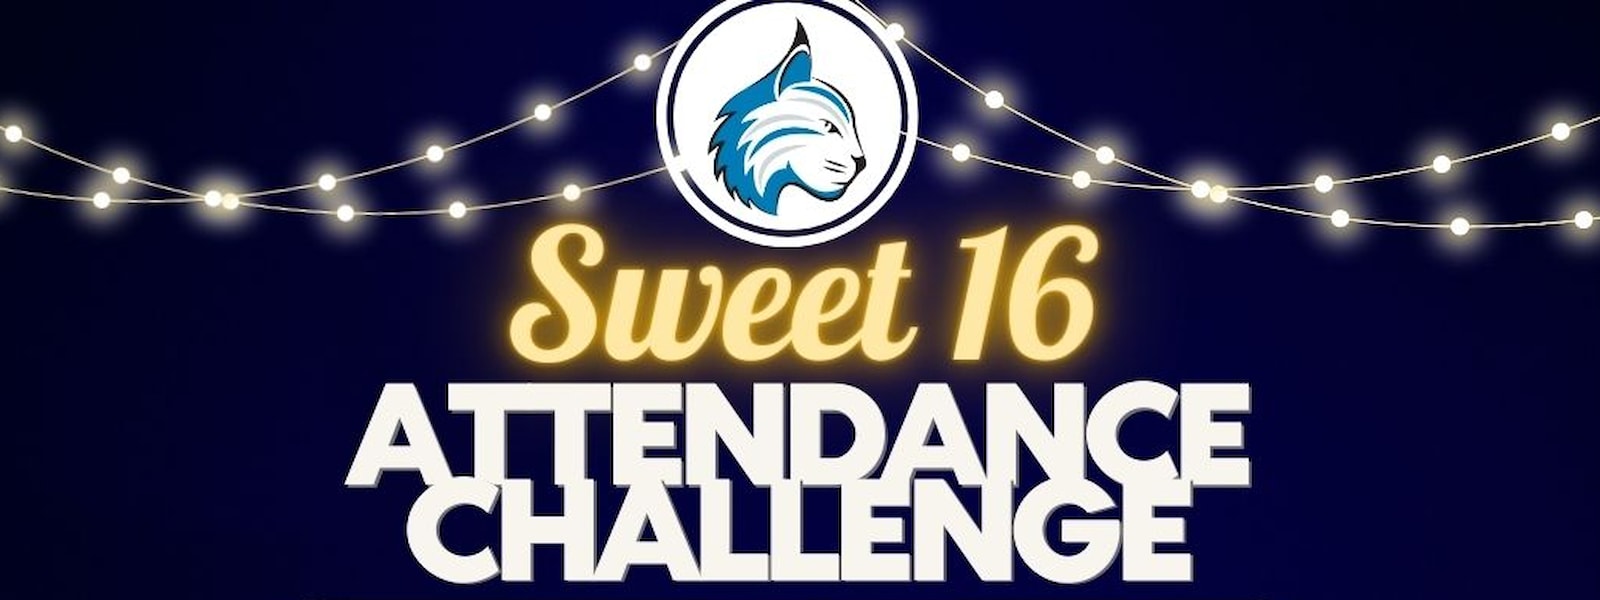 Sunset Hills bobcat logo with words Sweet 16 Attendance Challenge